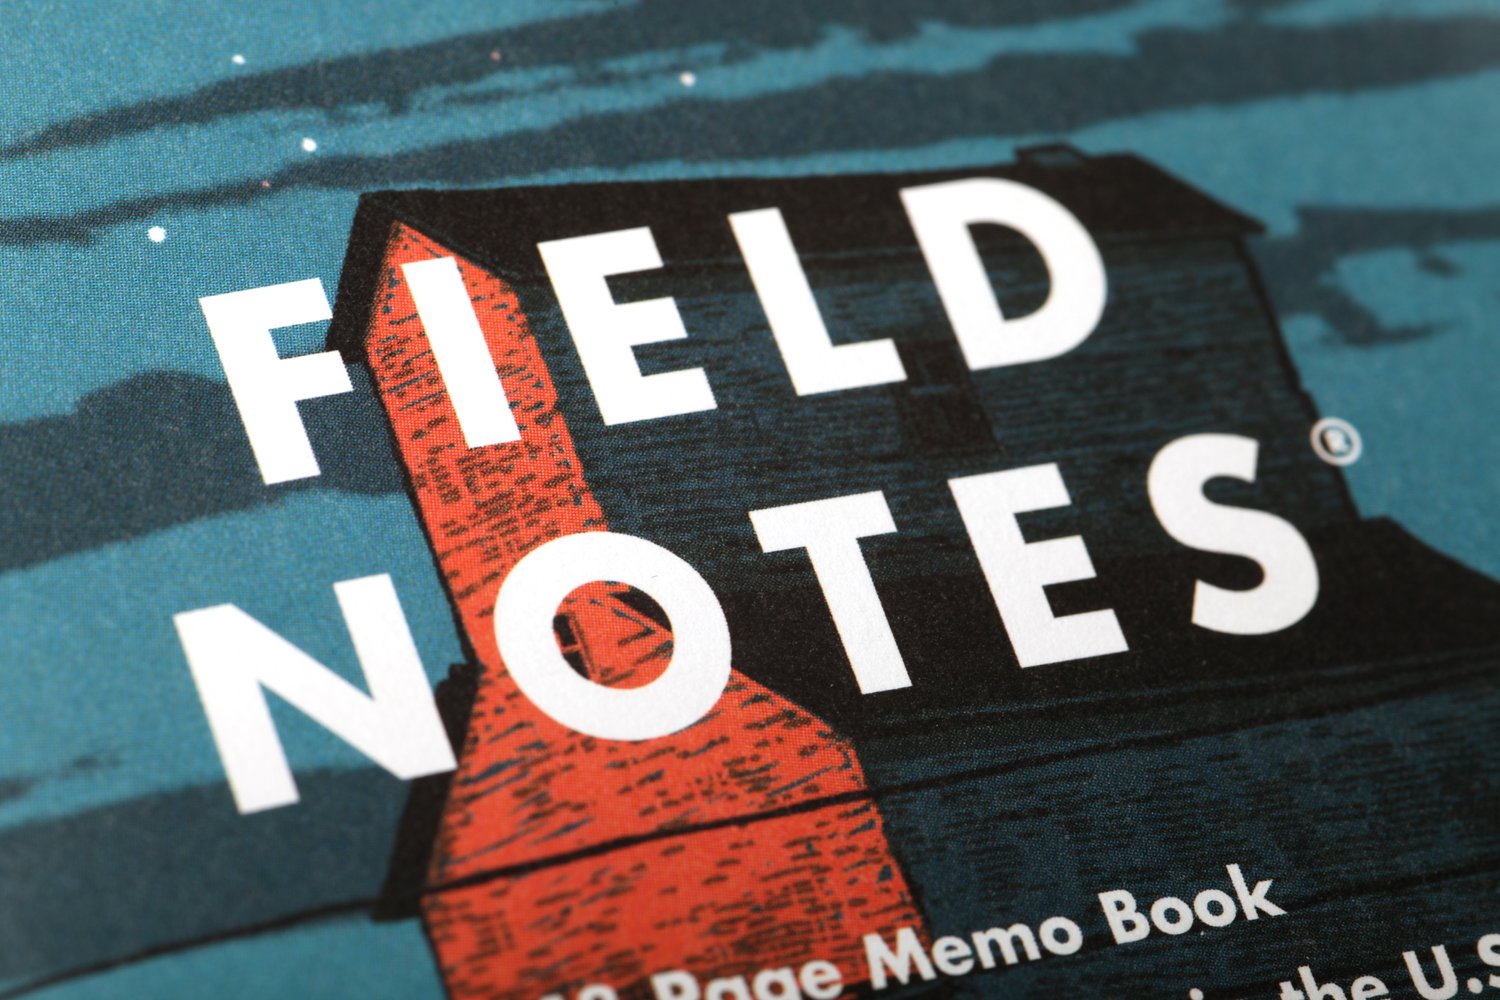 Field Notes Clic Pen 6 Pack - Black